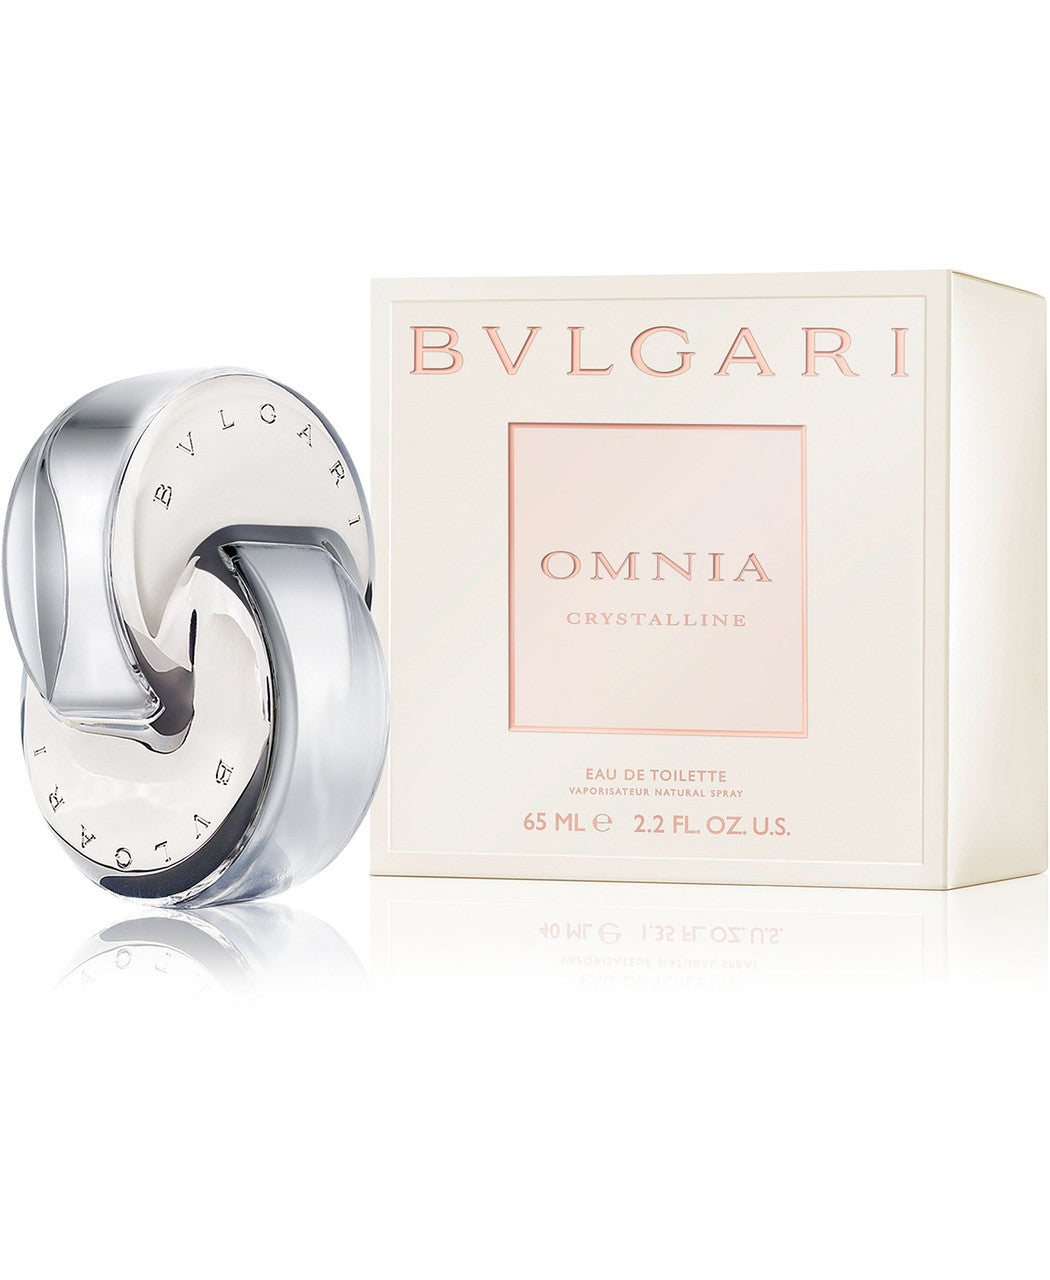 Bvlgari Omnia Crystalline Eau De Toilette Spray For Woman 3.4 oz 100 ml